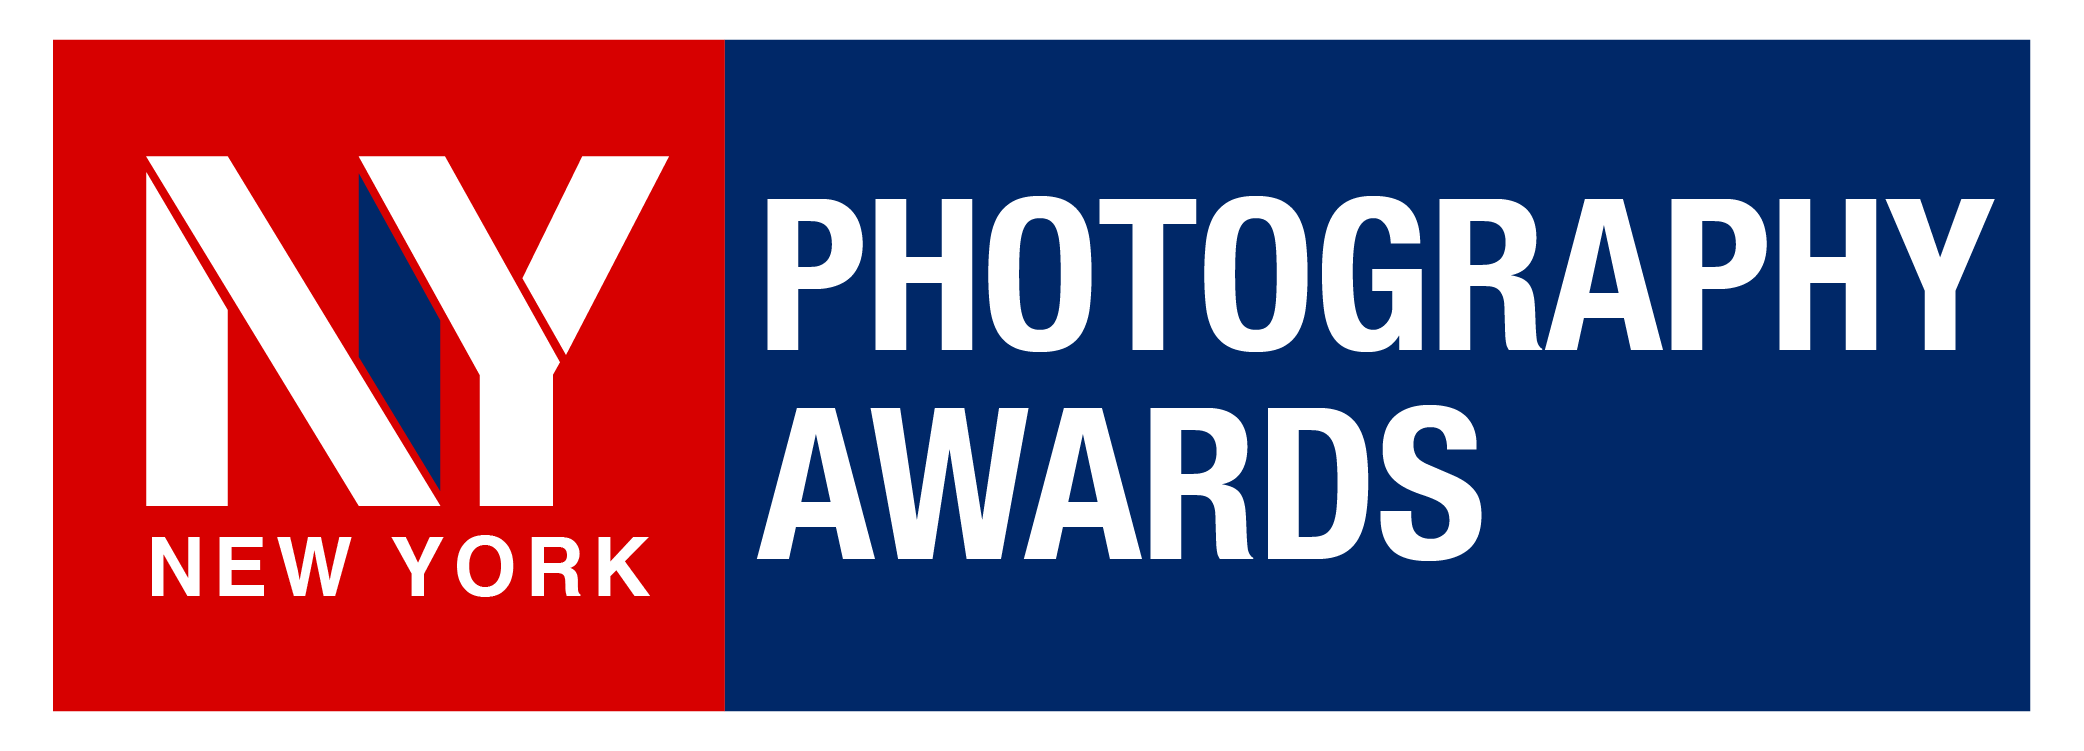 New York Photography Awards logo